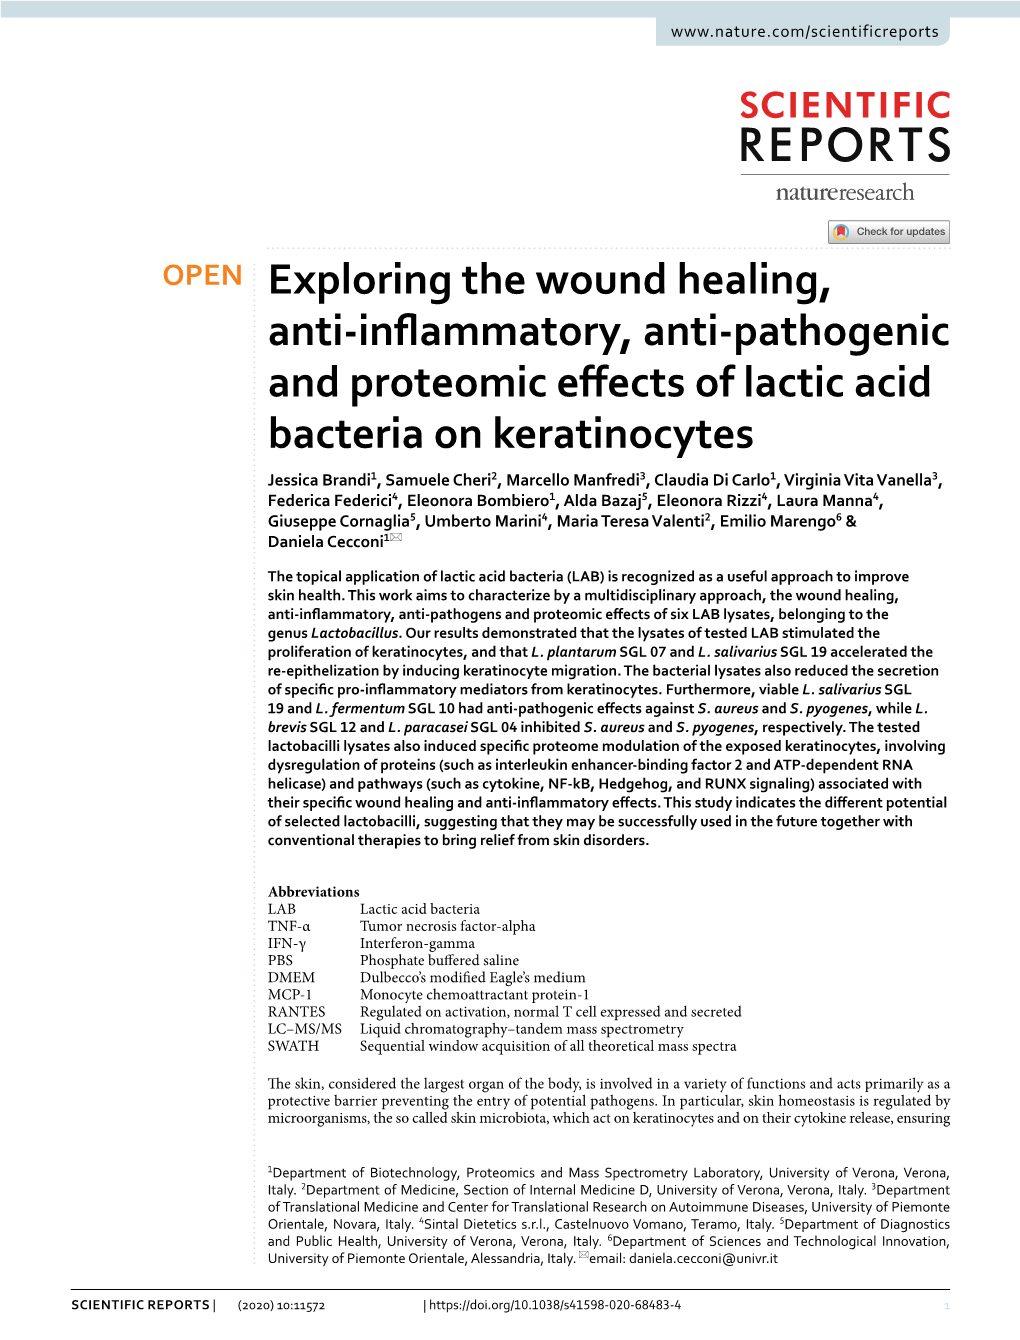 Exploring the Wound Healing, Anti-Inflammatory, Anti-Pathogenic